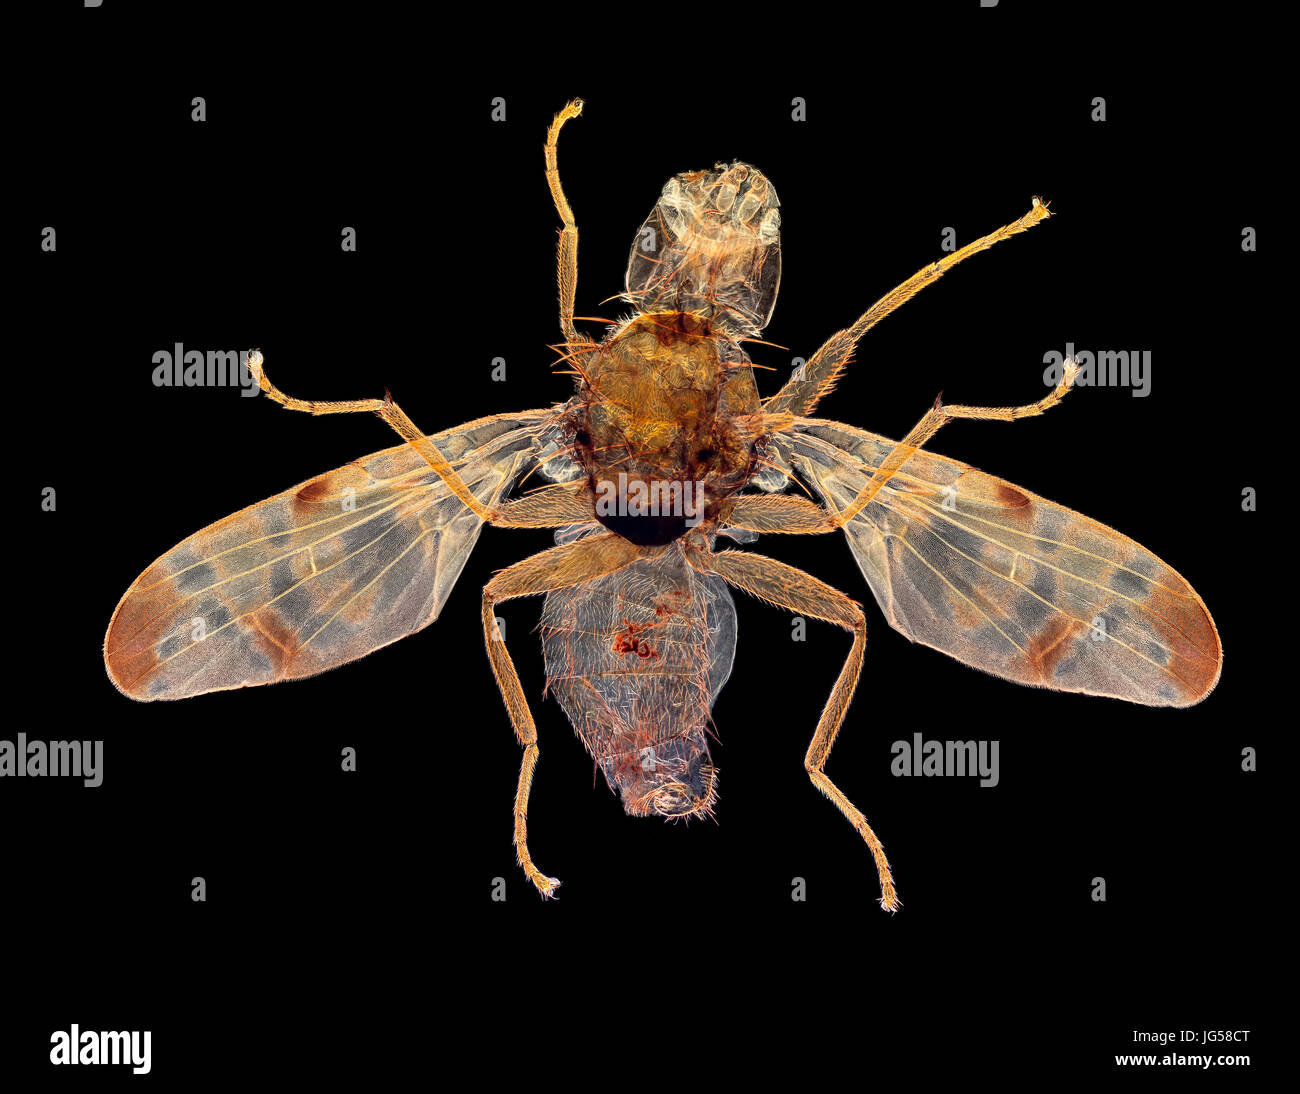 Bardana gall fly maschio, Tephritis bardanae, campo oscuro macro immagine, Tephritis bardanae è un foto-winged fly della famiglia Tephritidae, Foto Stock